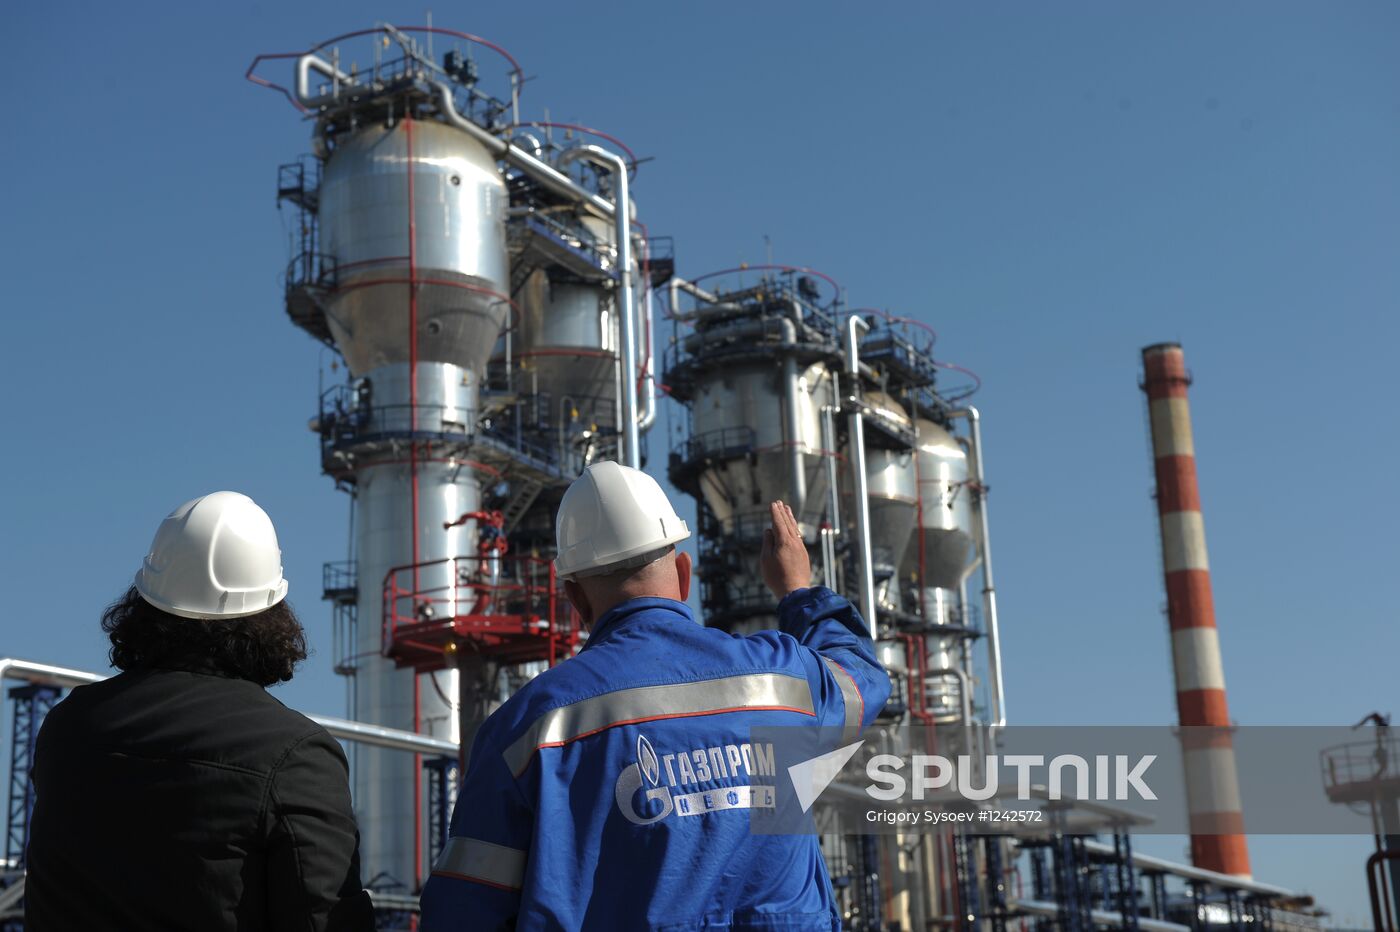 Moscow Gazprom Oil refinery facility